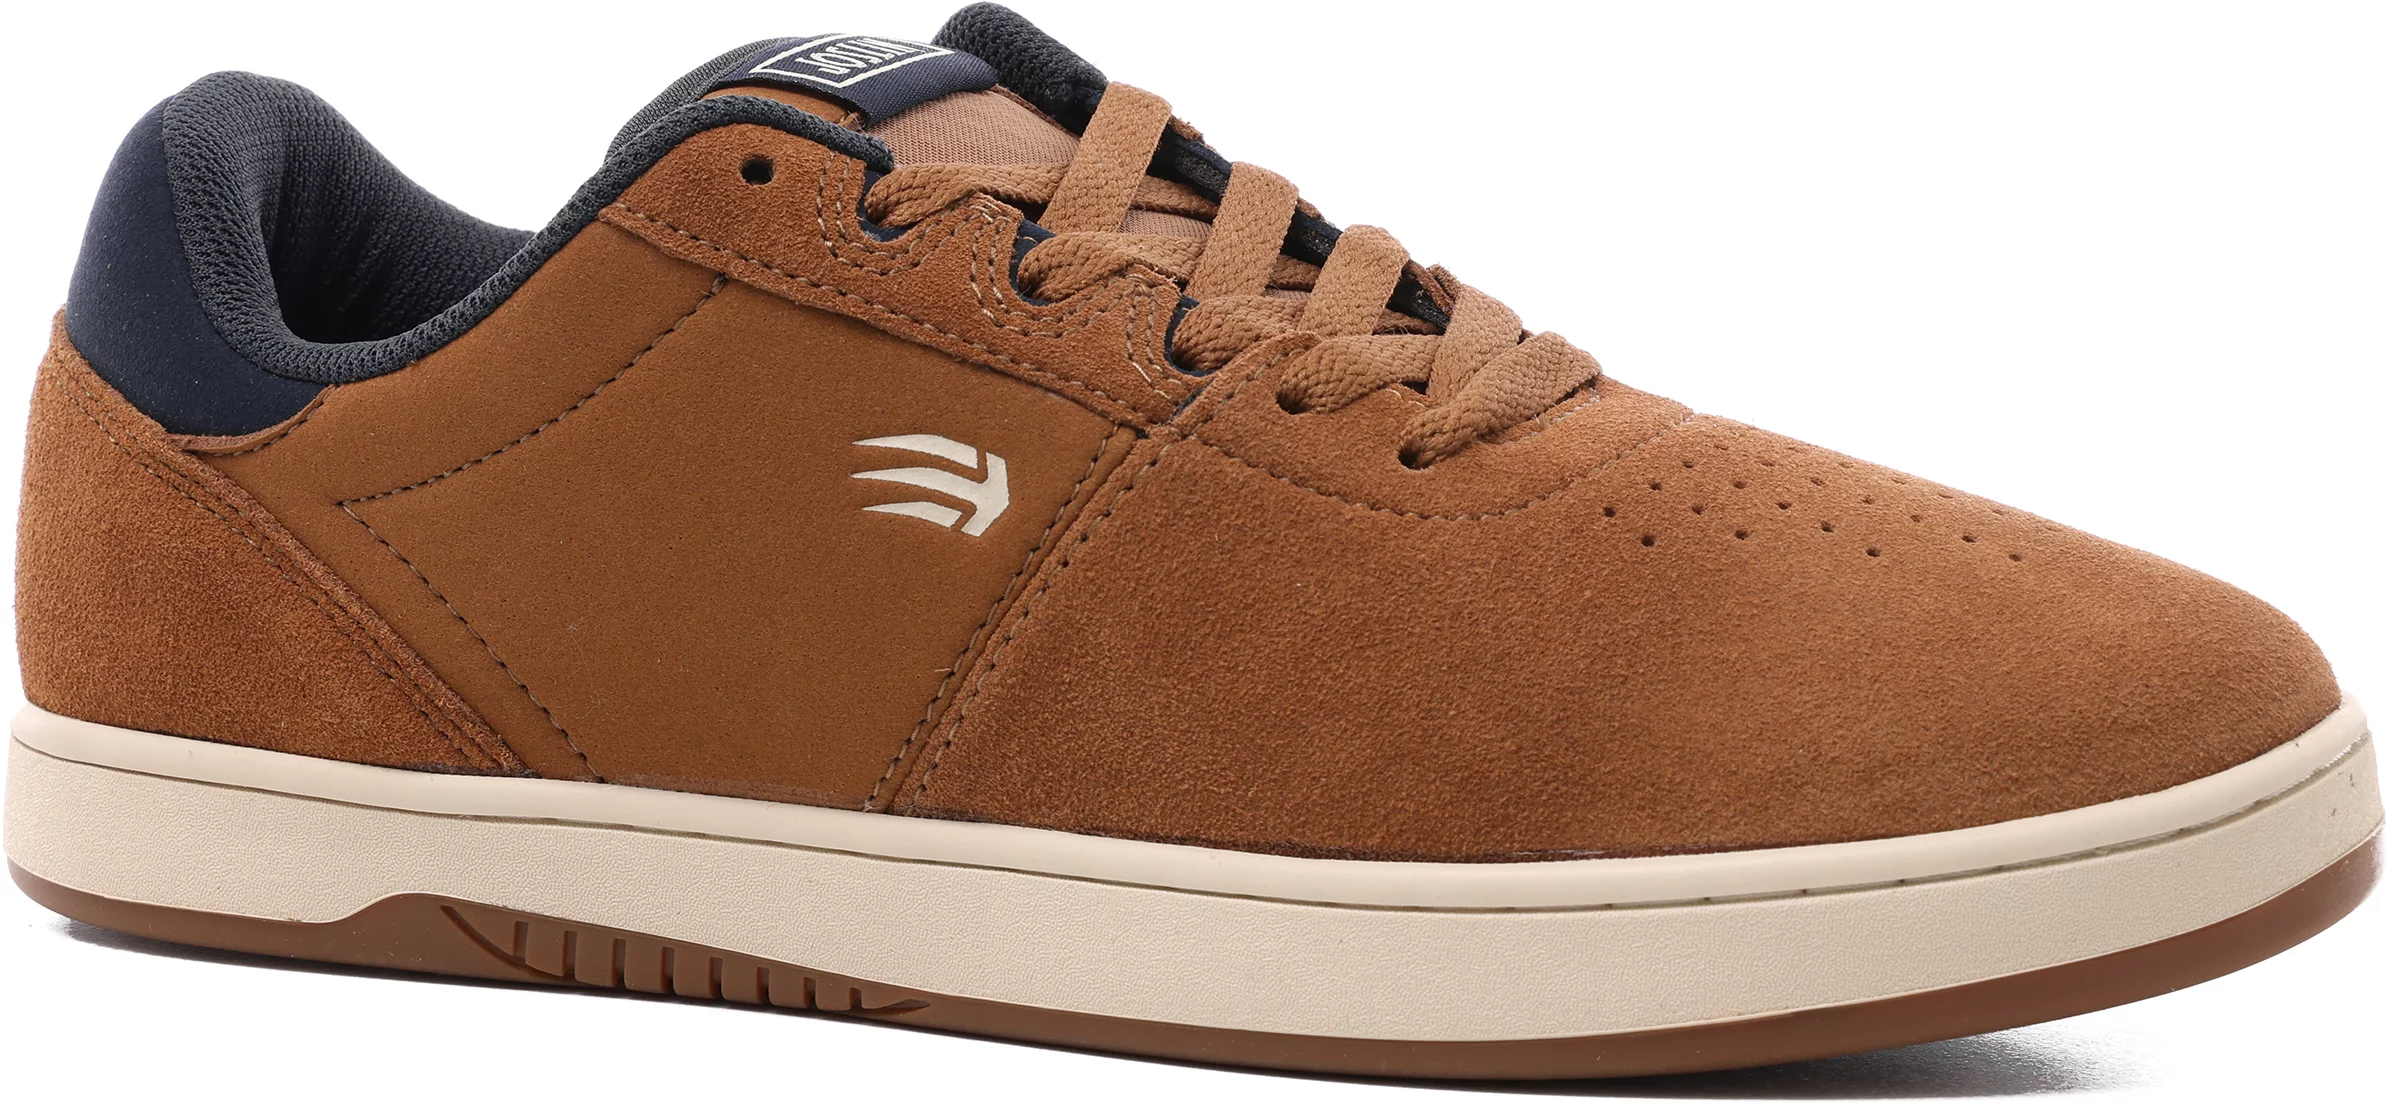 Etnies JOSL1N Skate Shoes - brown/navy - Free Shipping | Tactics